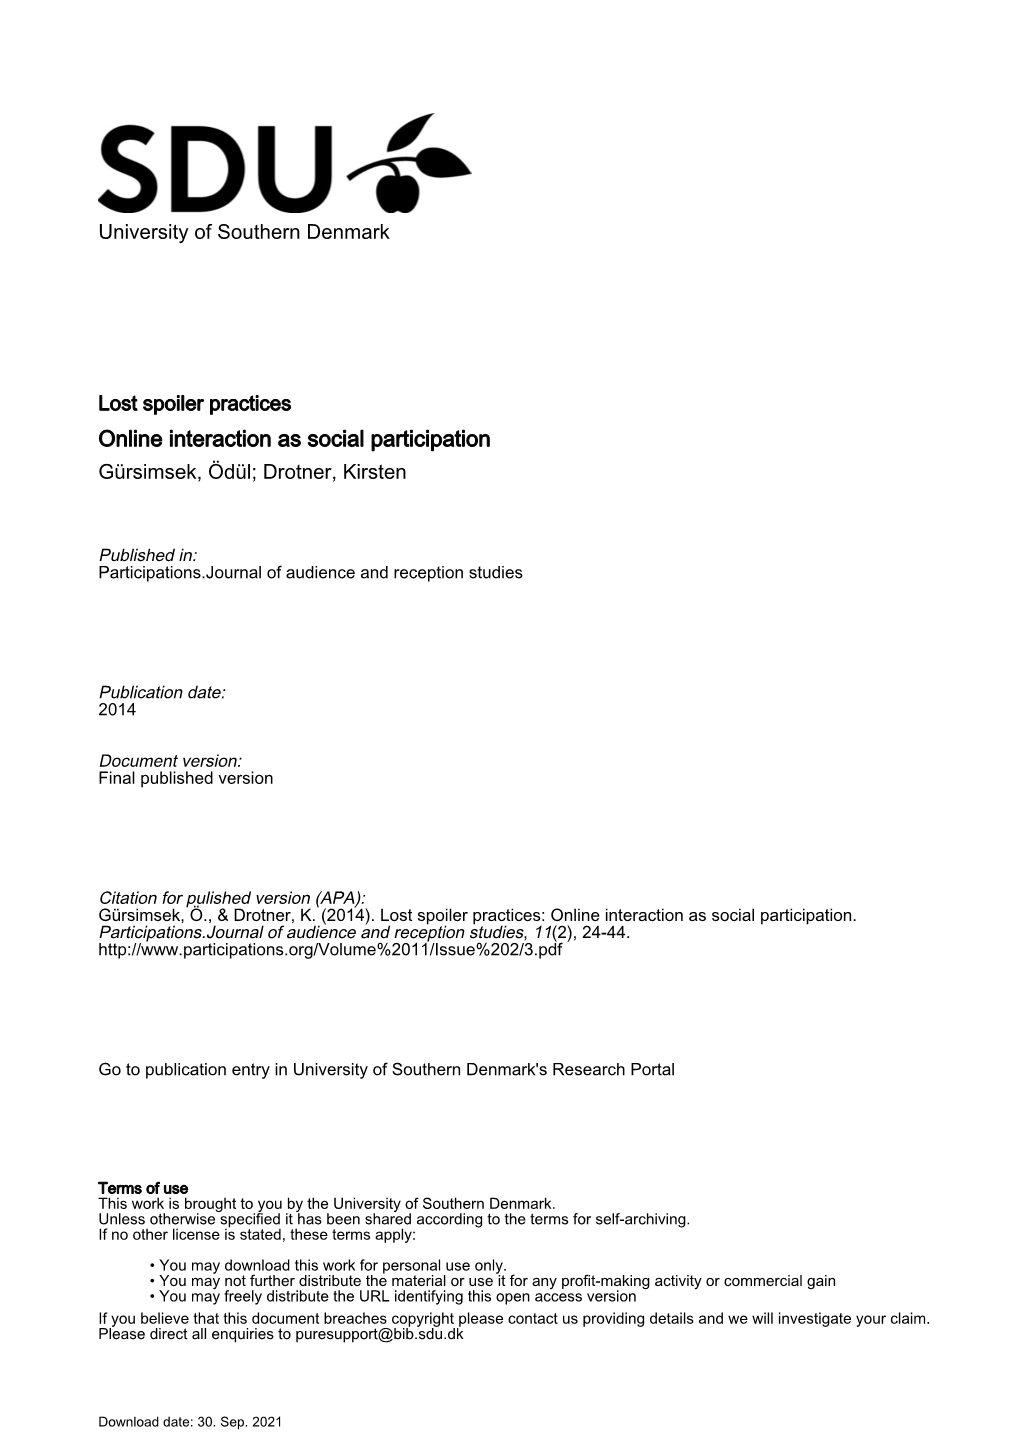 Online Interaction As Social Participation Gürsimsek, Ödül; Drotner, Kirsten